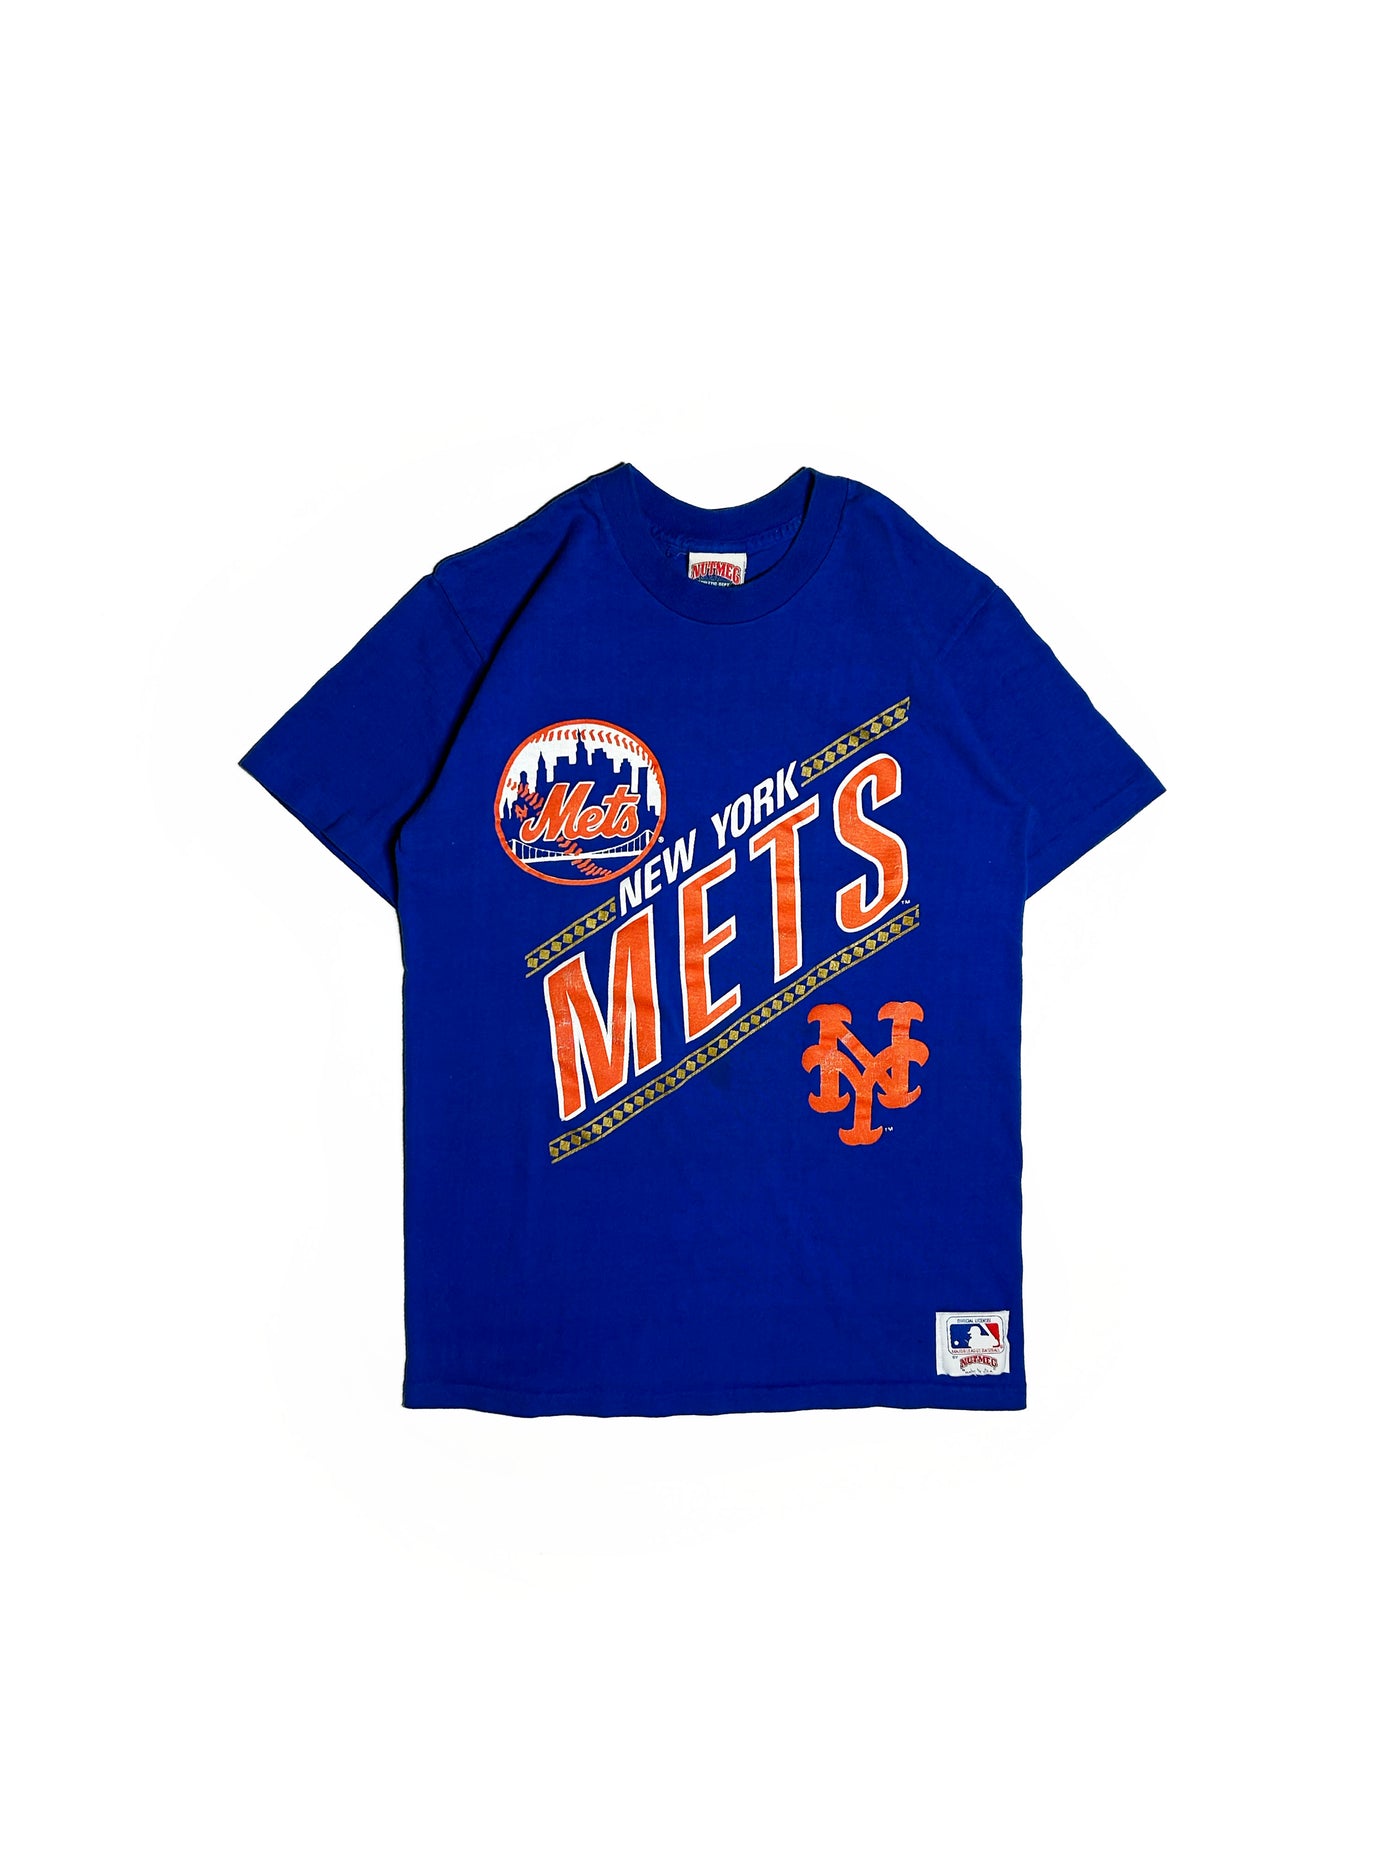 Vintage 90s New York Mets T-Shirt